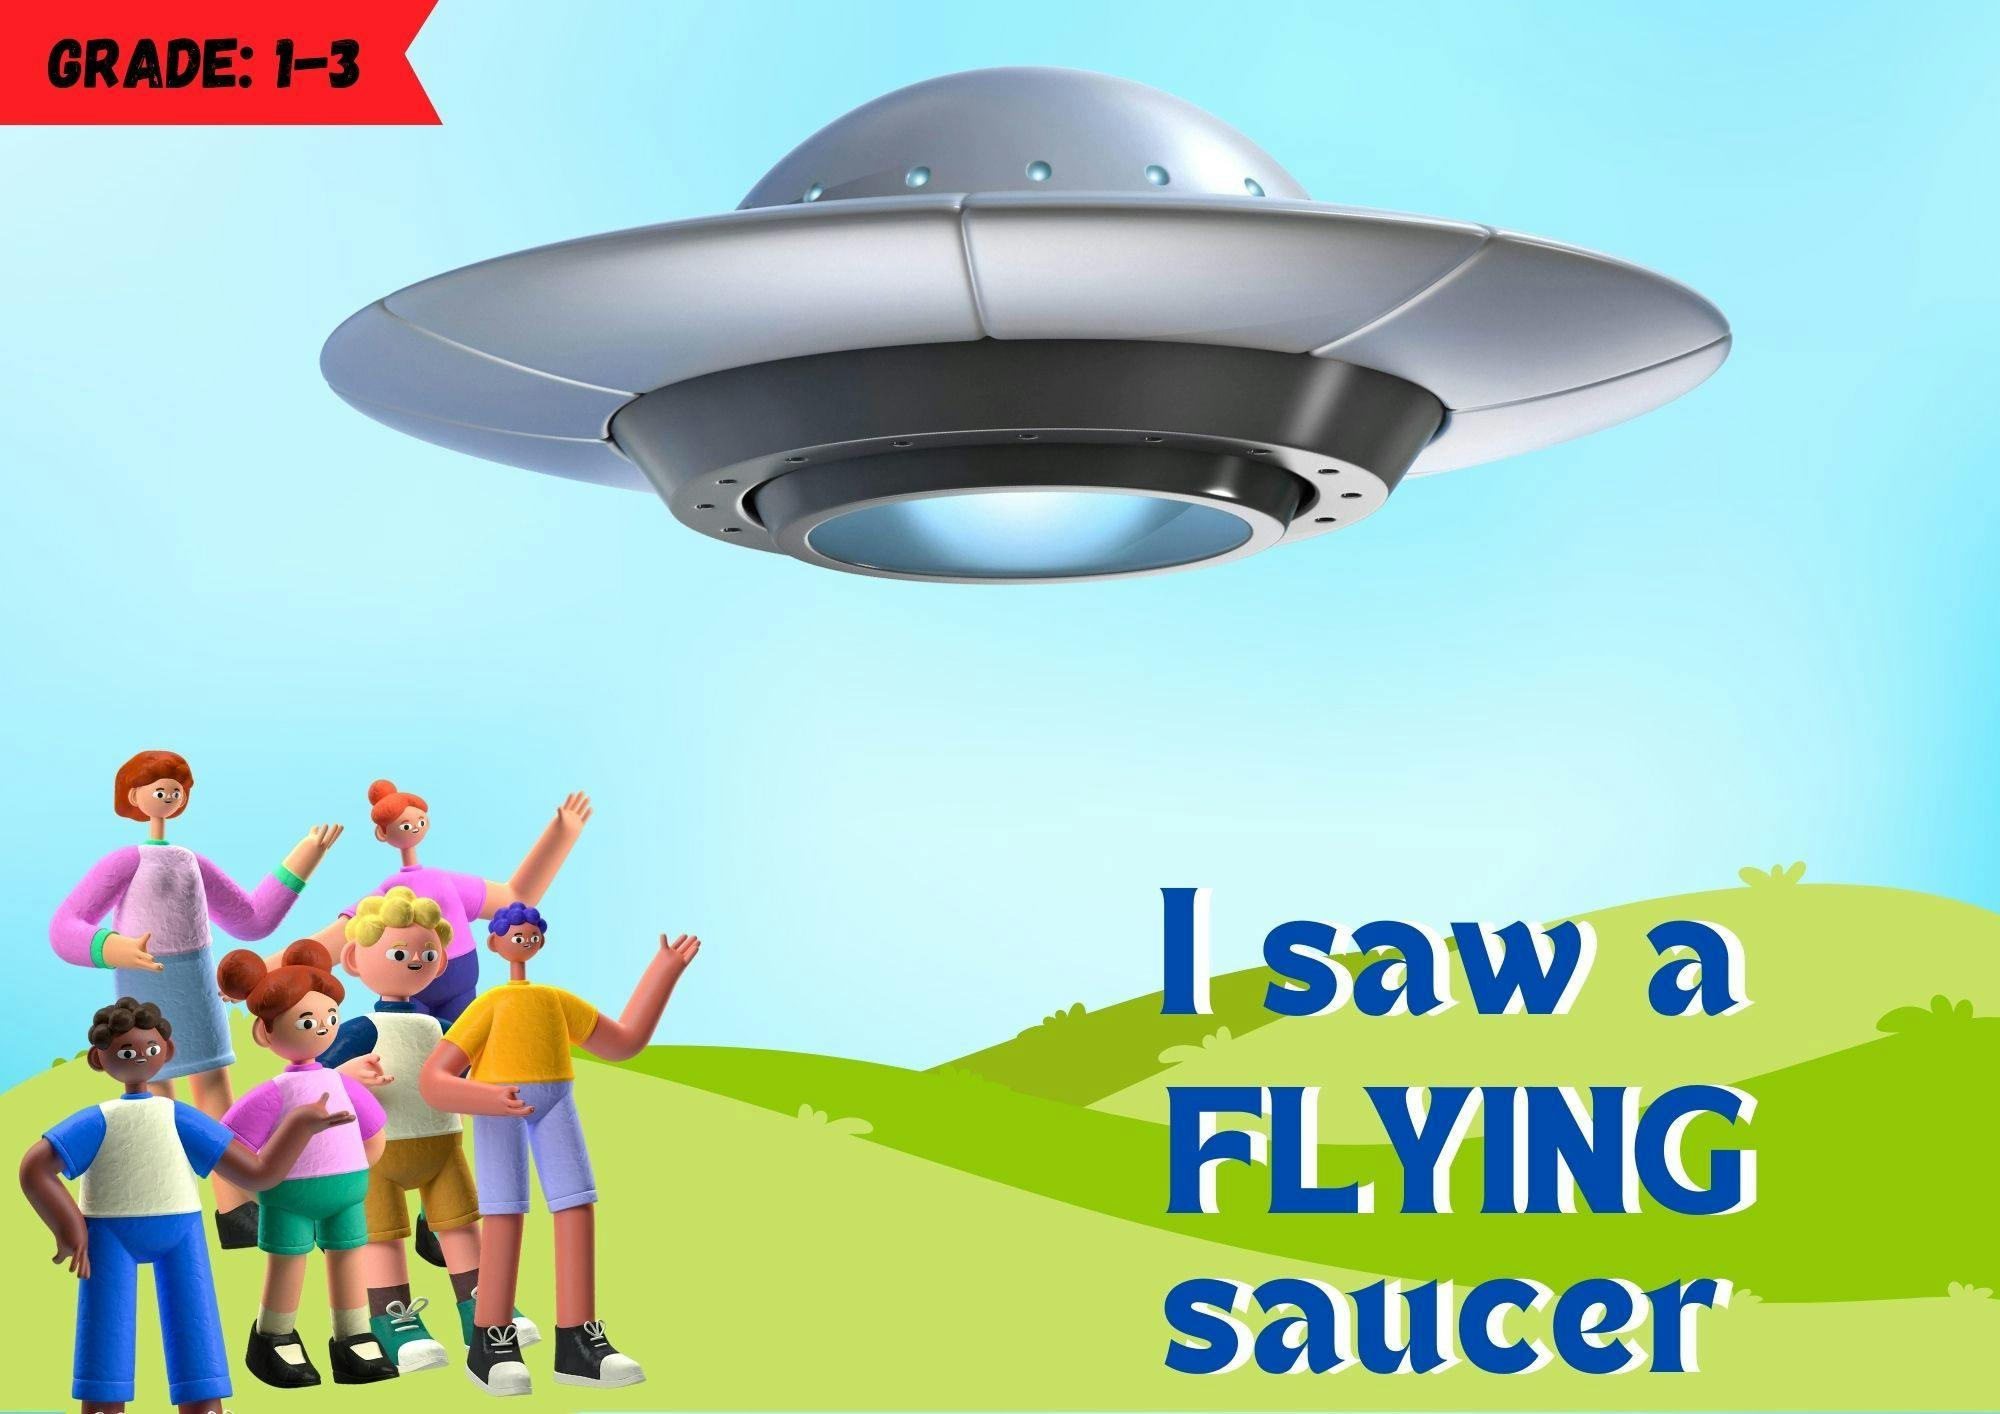 I saw a flying saucer